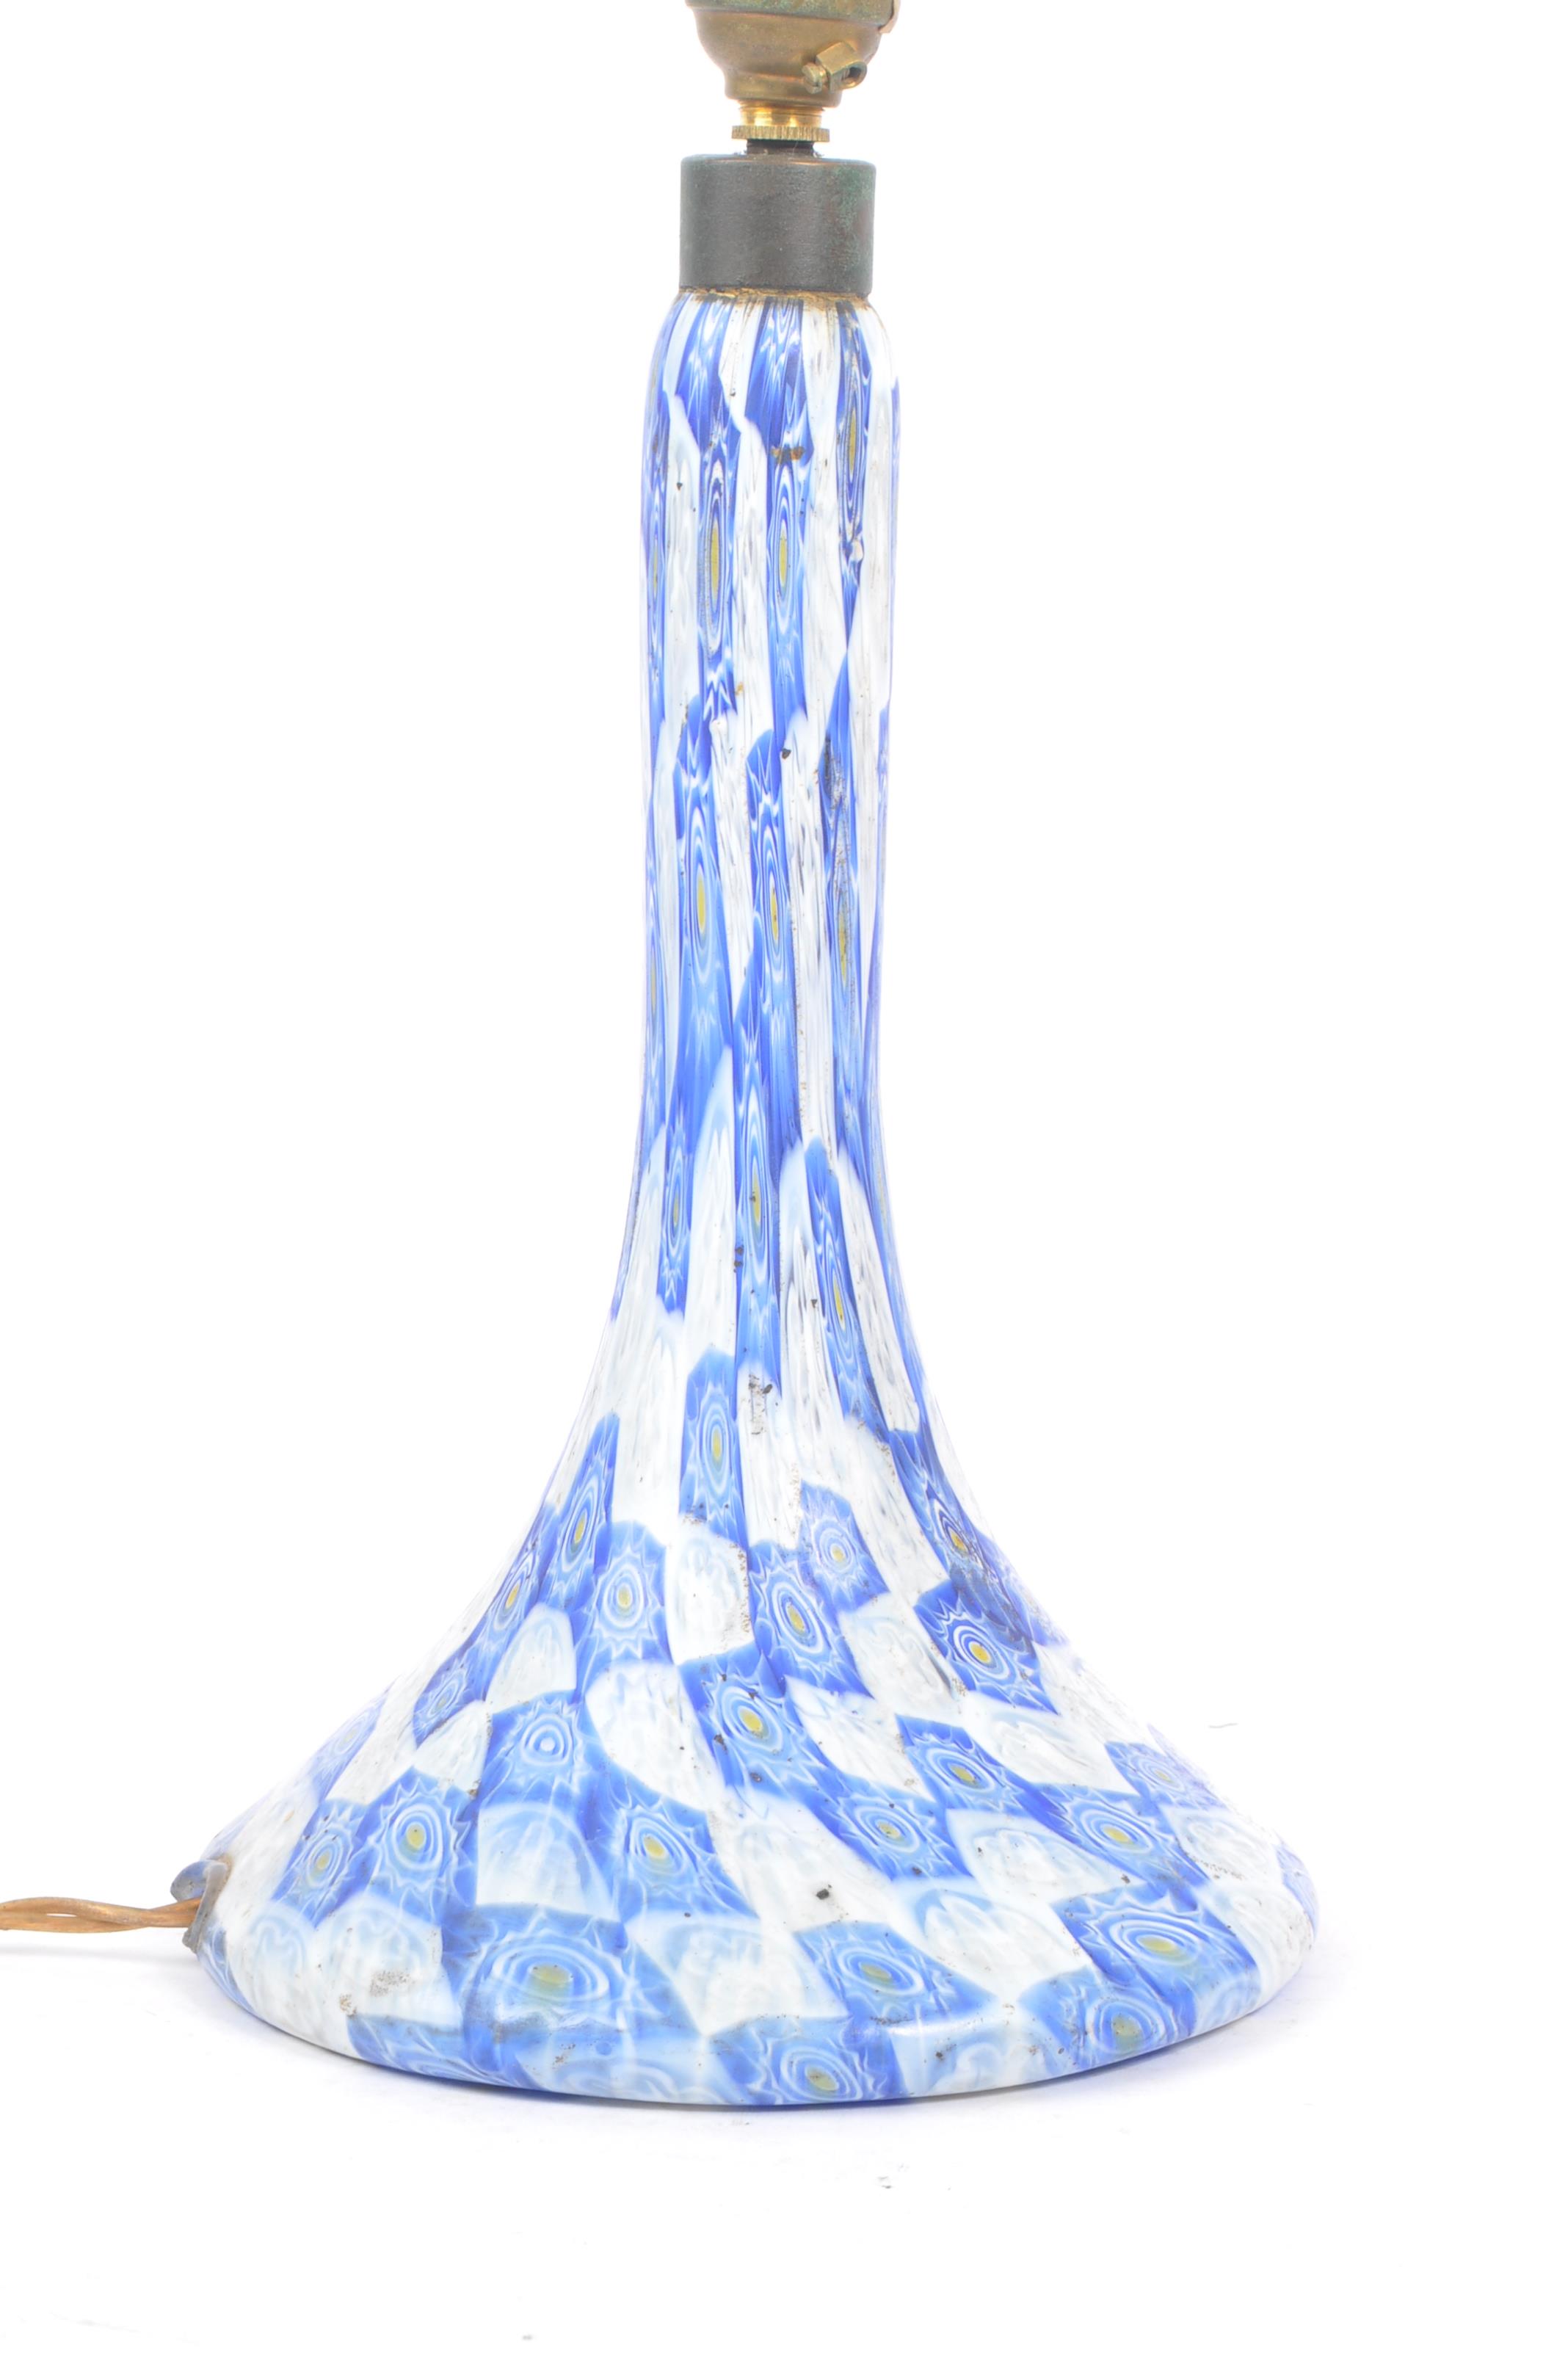 MURANO MANNER ART GLASS MILLEFIORI TABLE LAMP - Image 3 of 7